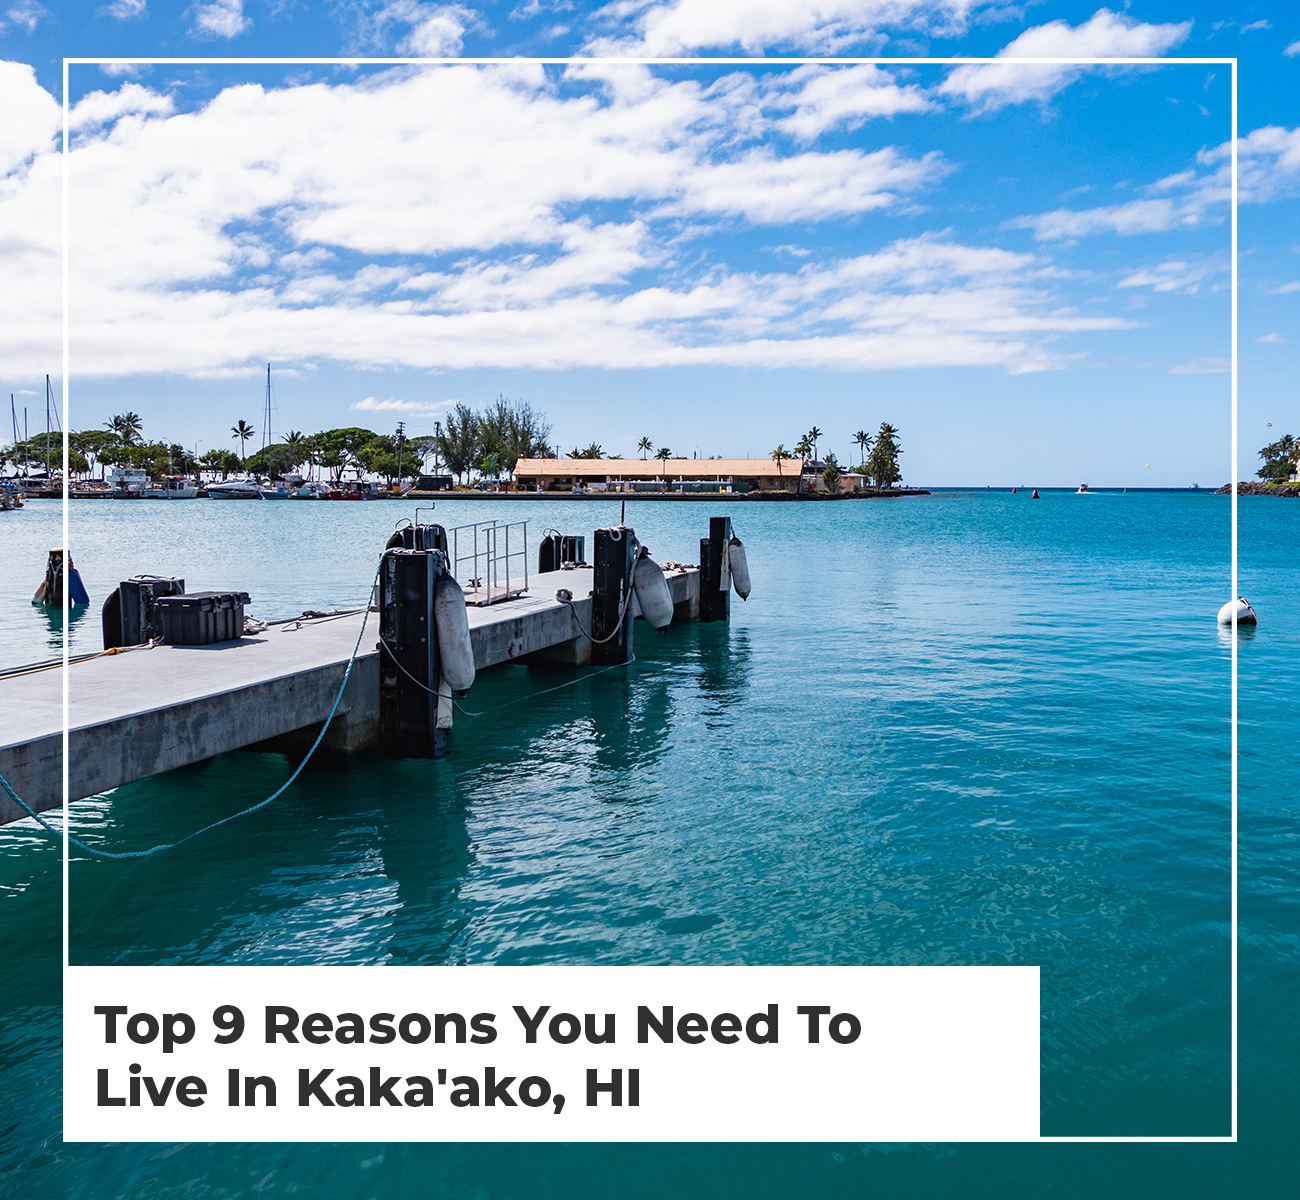 Top 9 Reasons You Need To Live In Kaka'ako, HI